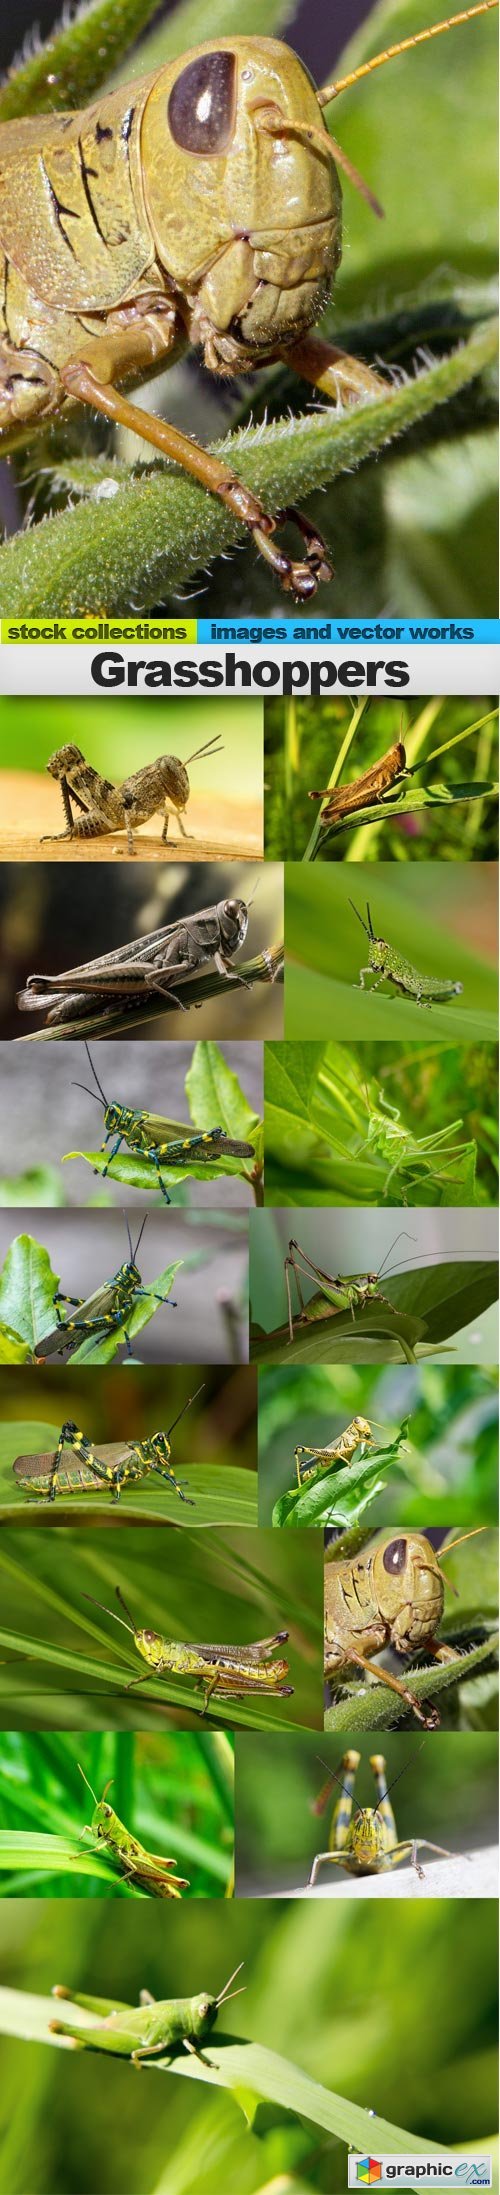 Grasshoppers, 15 x UHQ JPEG